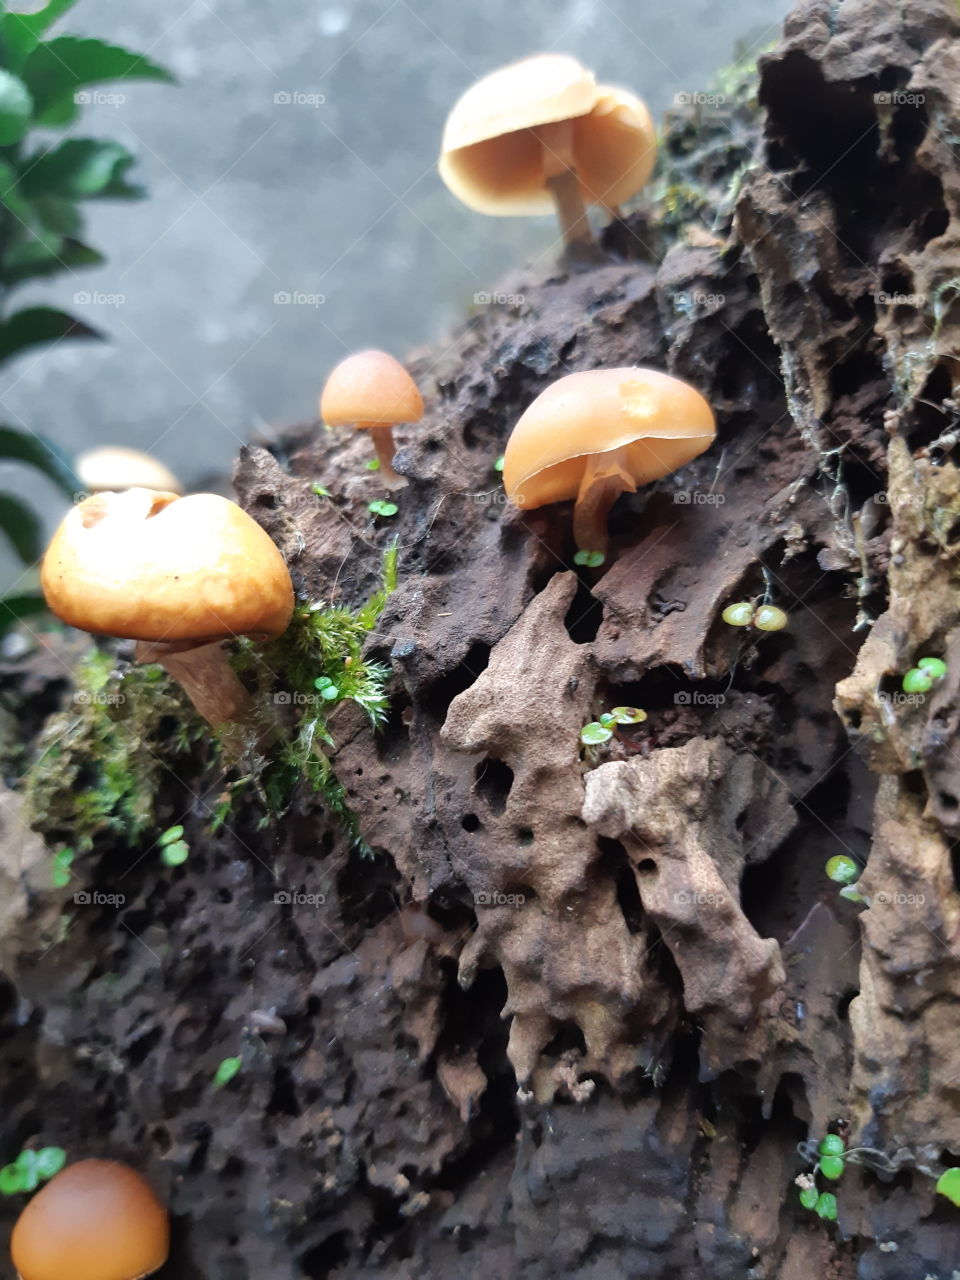 Tiny Mushrooms close up